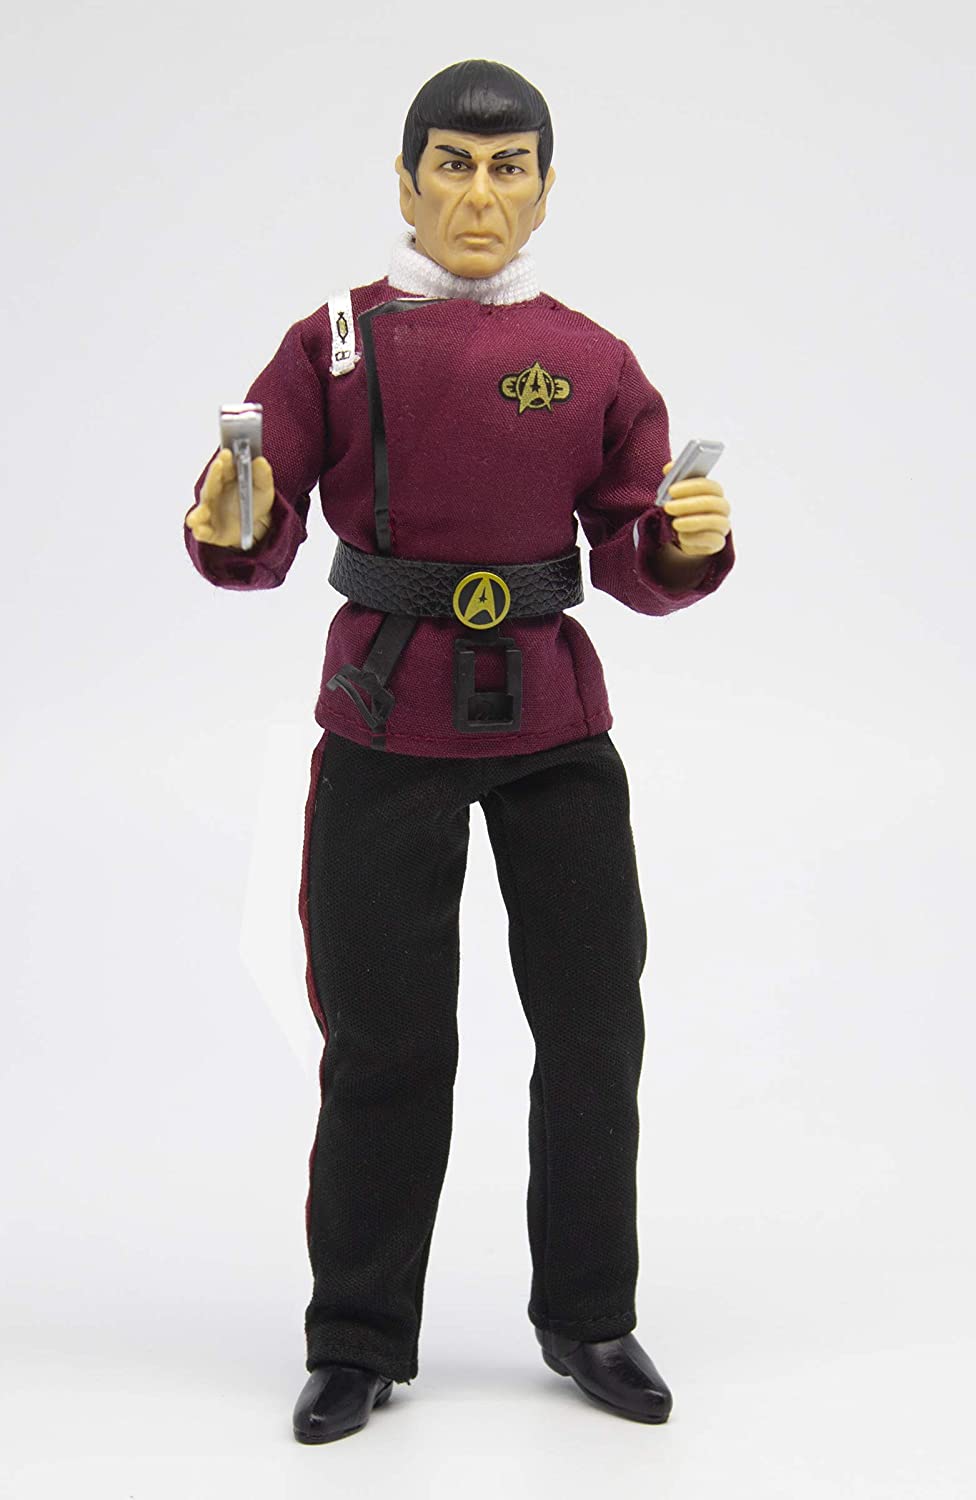 Mego 8" Figure - Sci-Fi - Star Trek - Captain Spock (6596449501284)